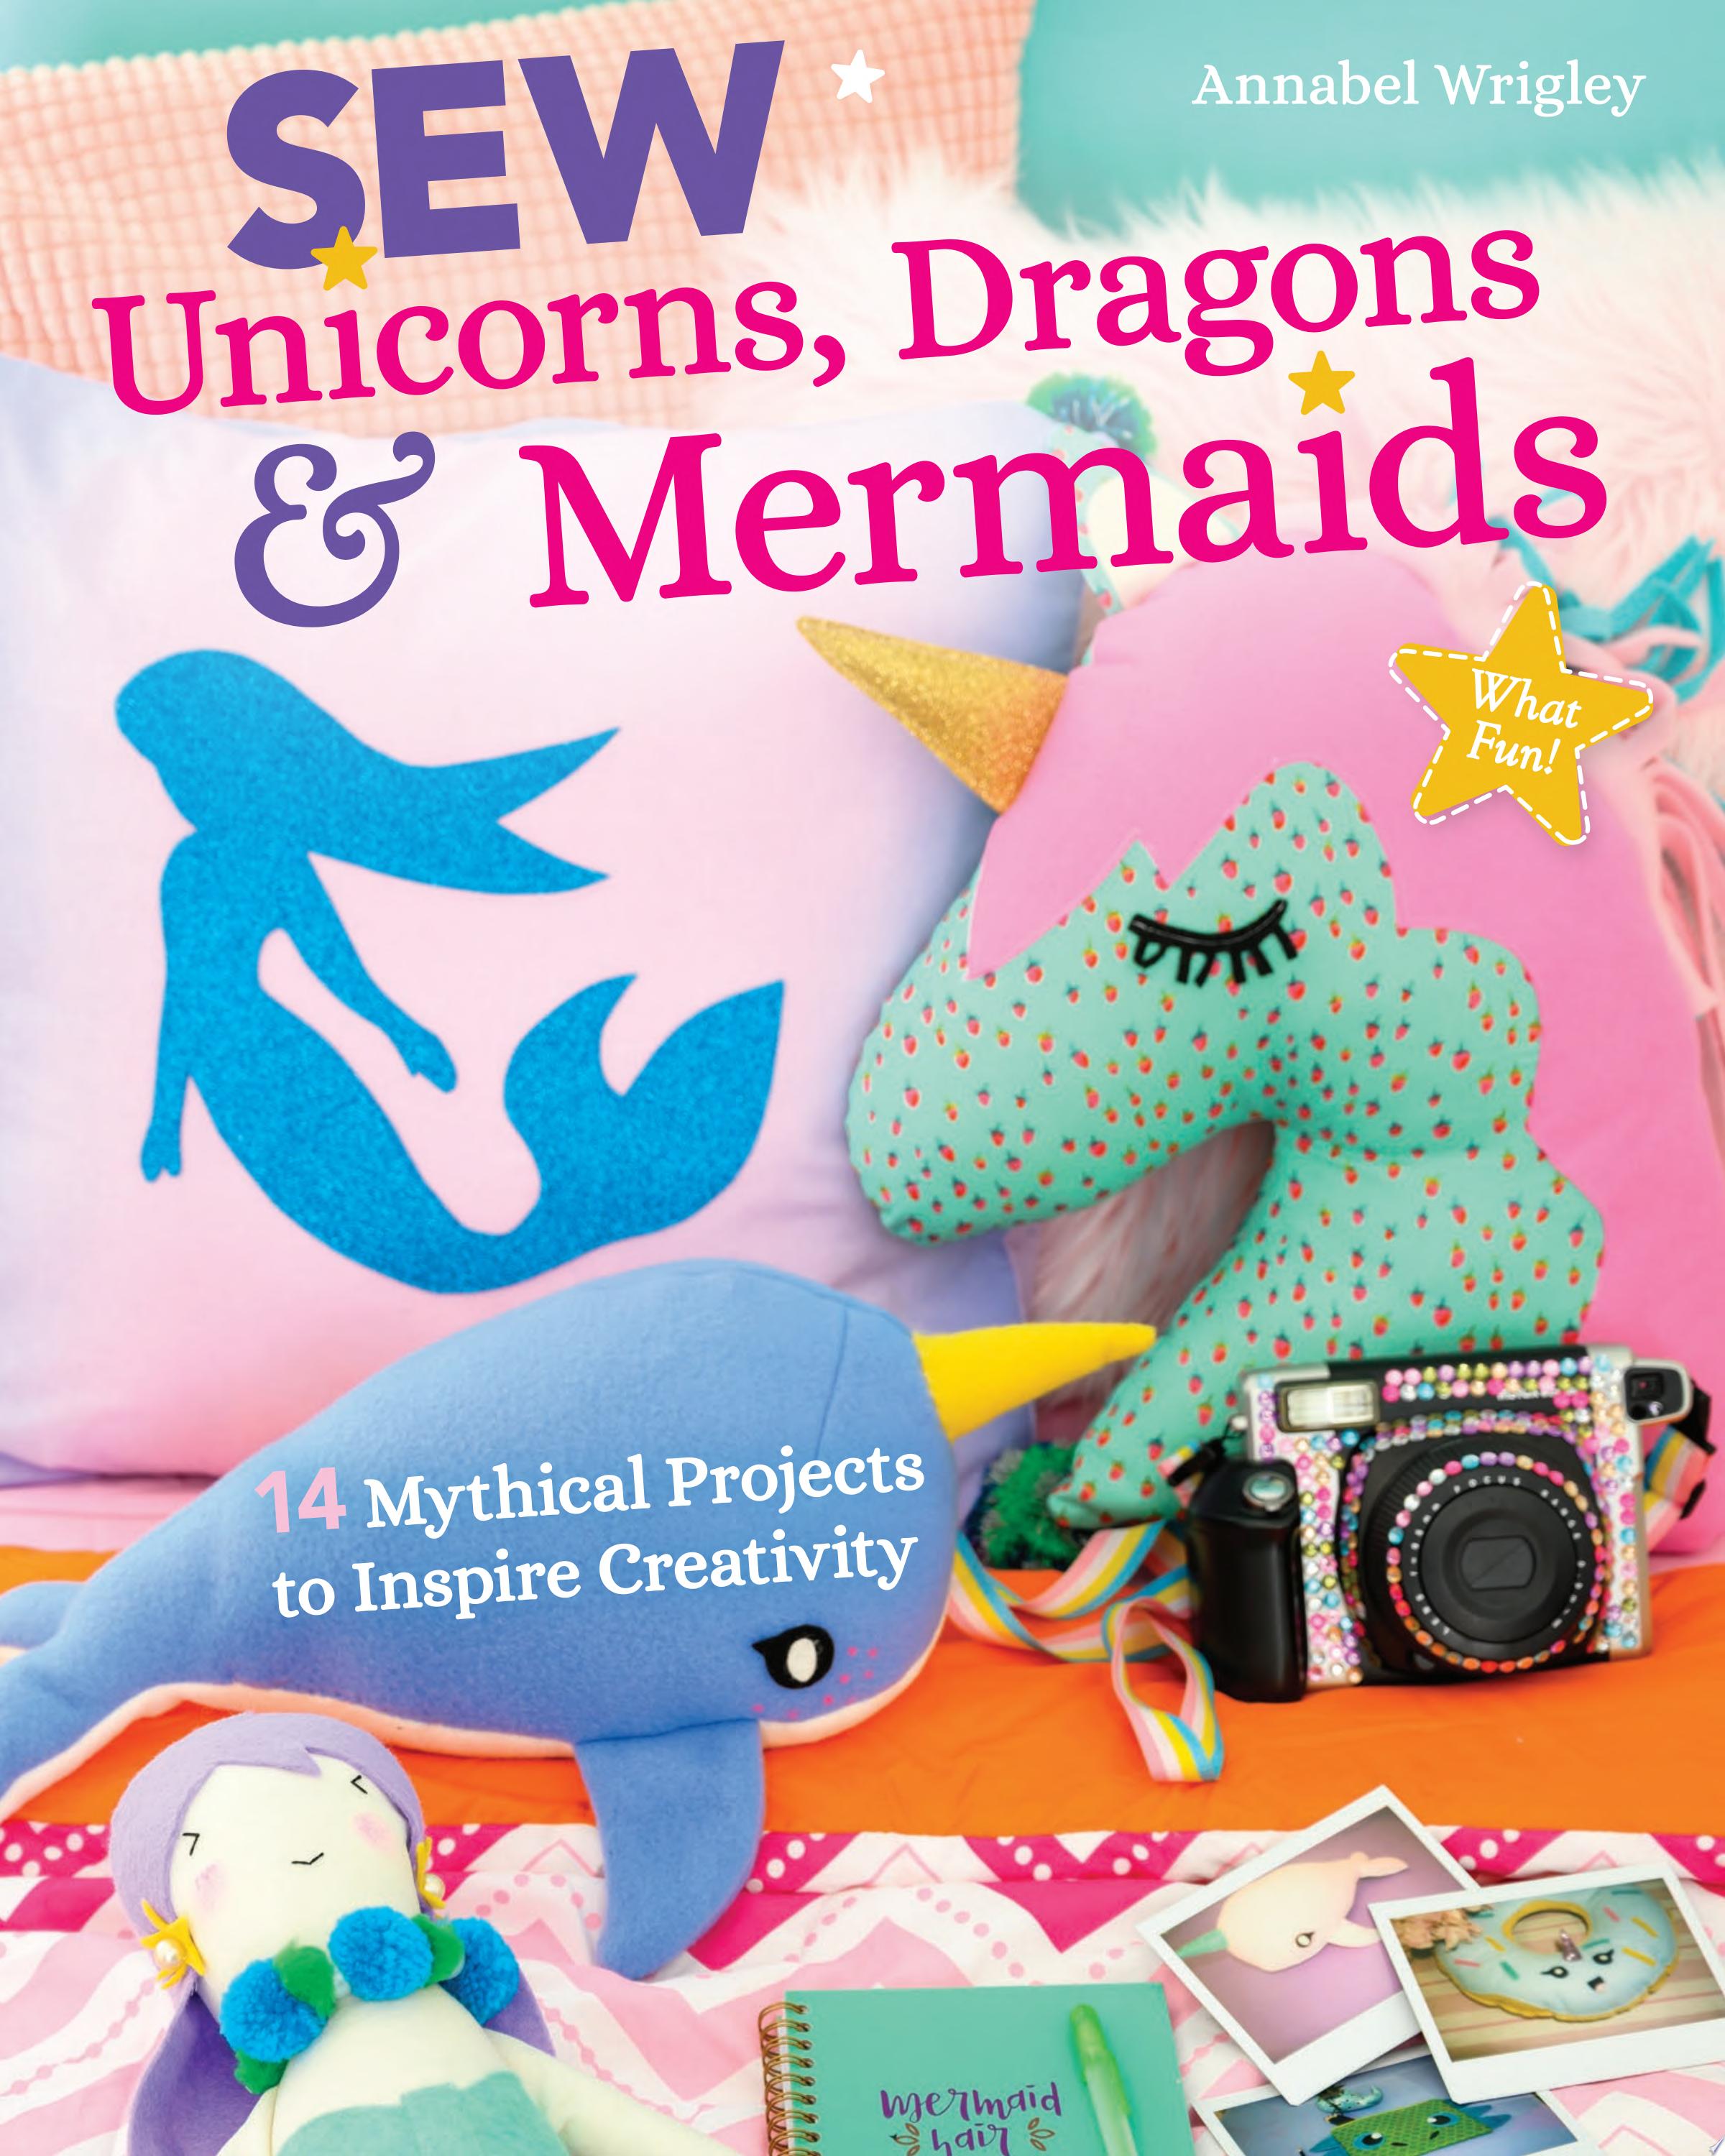 Image for "Sew Unicorns, Dragons & Mermaids, What Fun!"